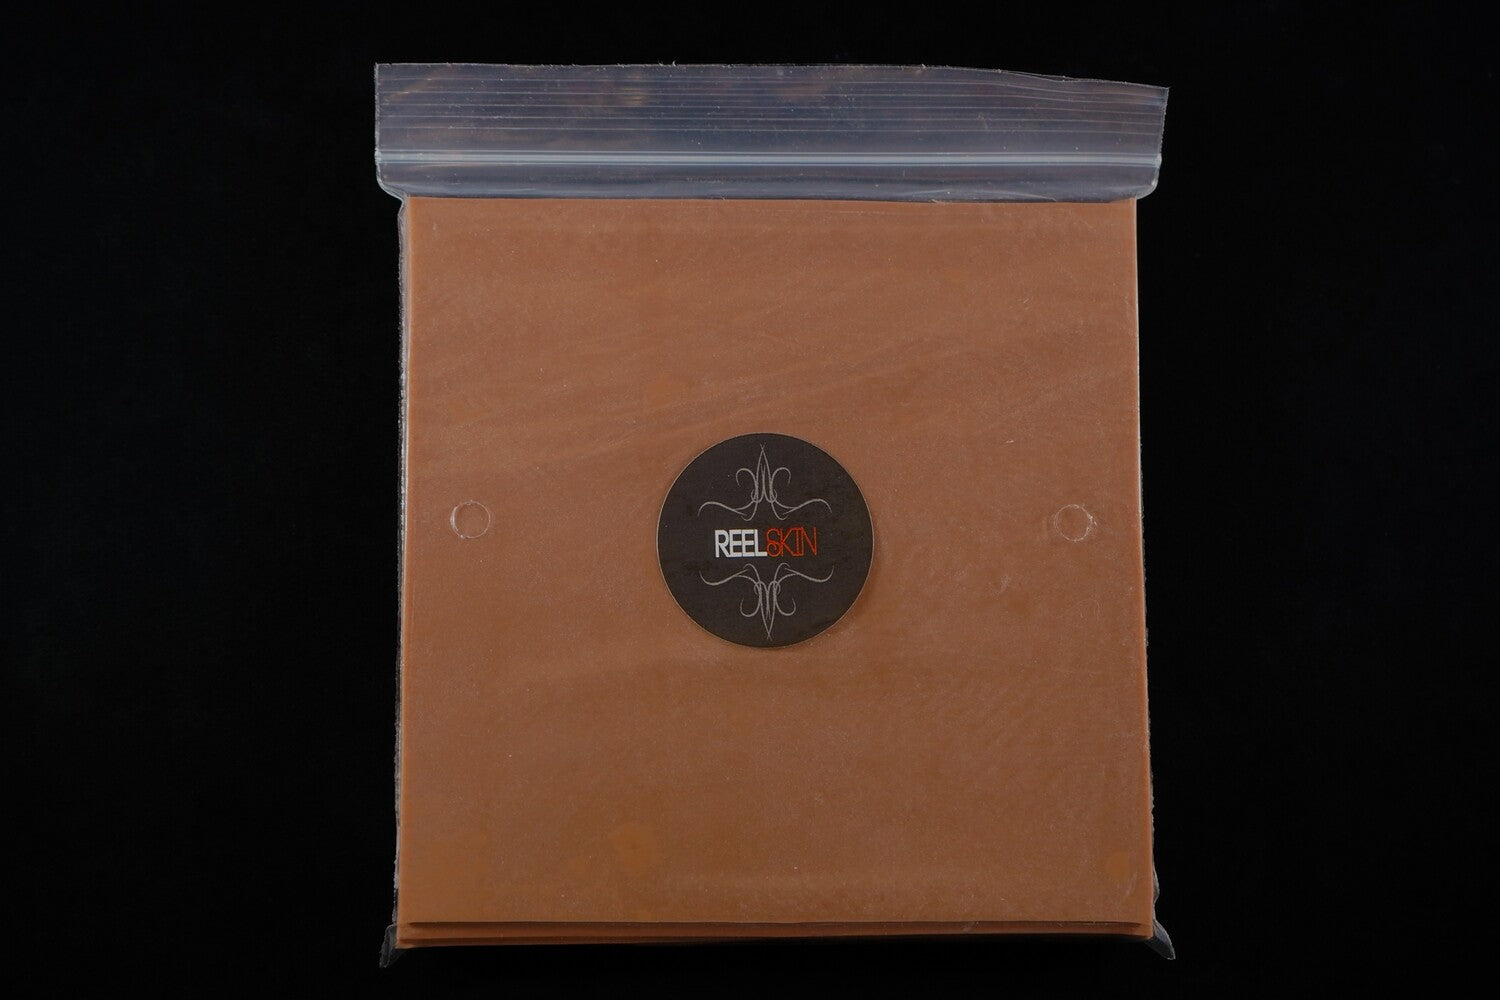 ReelSkin 3 Pack Skin Tone Set - One Large Light, One Medium Dark, One